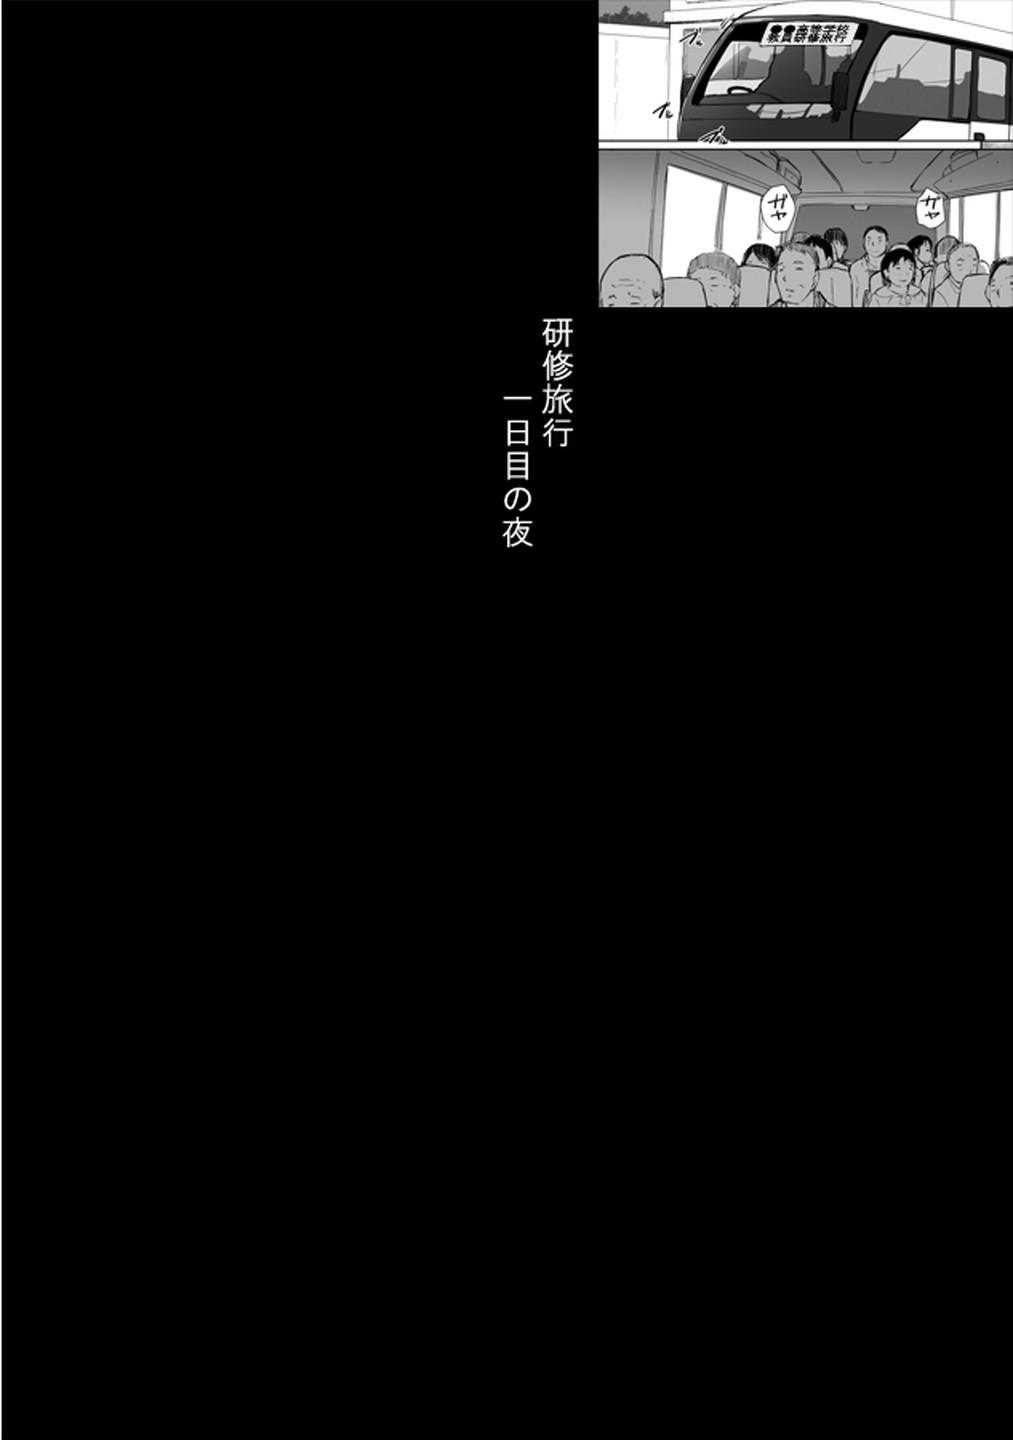 Sakiko-san in delusion Vol.1 Ver.1.1 ~Sakiko-san's circumstance at an educational training~ Stupid Sakiko (collage) on-going 41